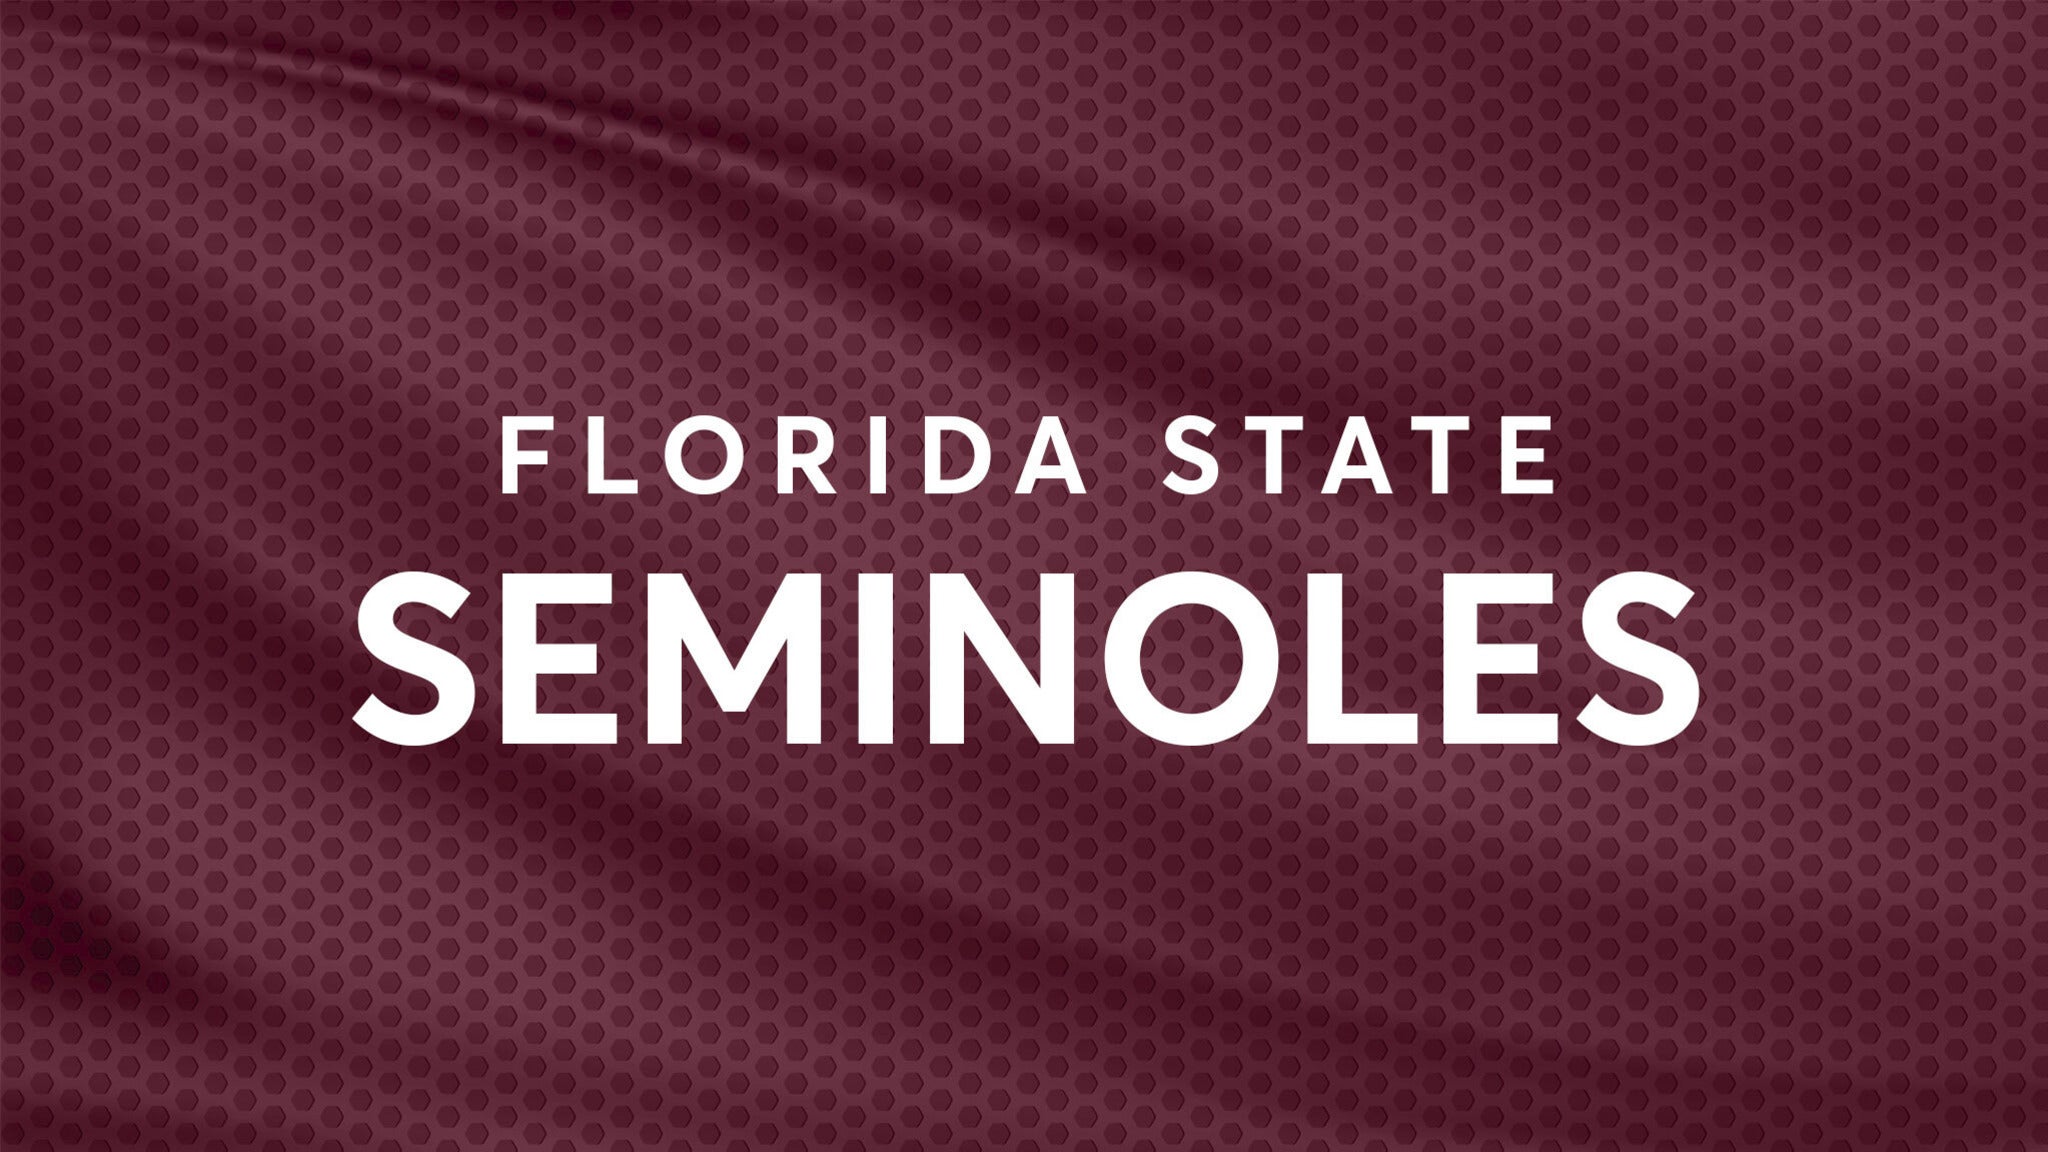 Florida State Seminoles Football vs. Clemson Tigers Football - Tallahassee, FL 32304